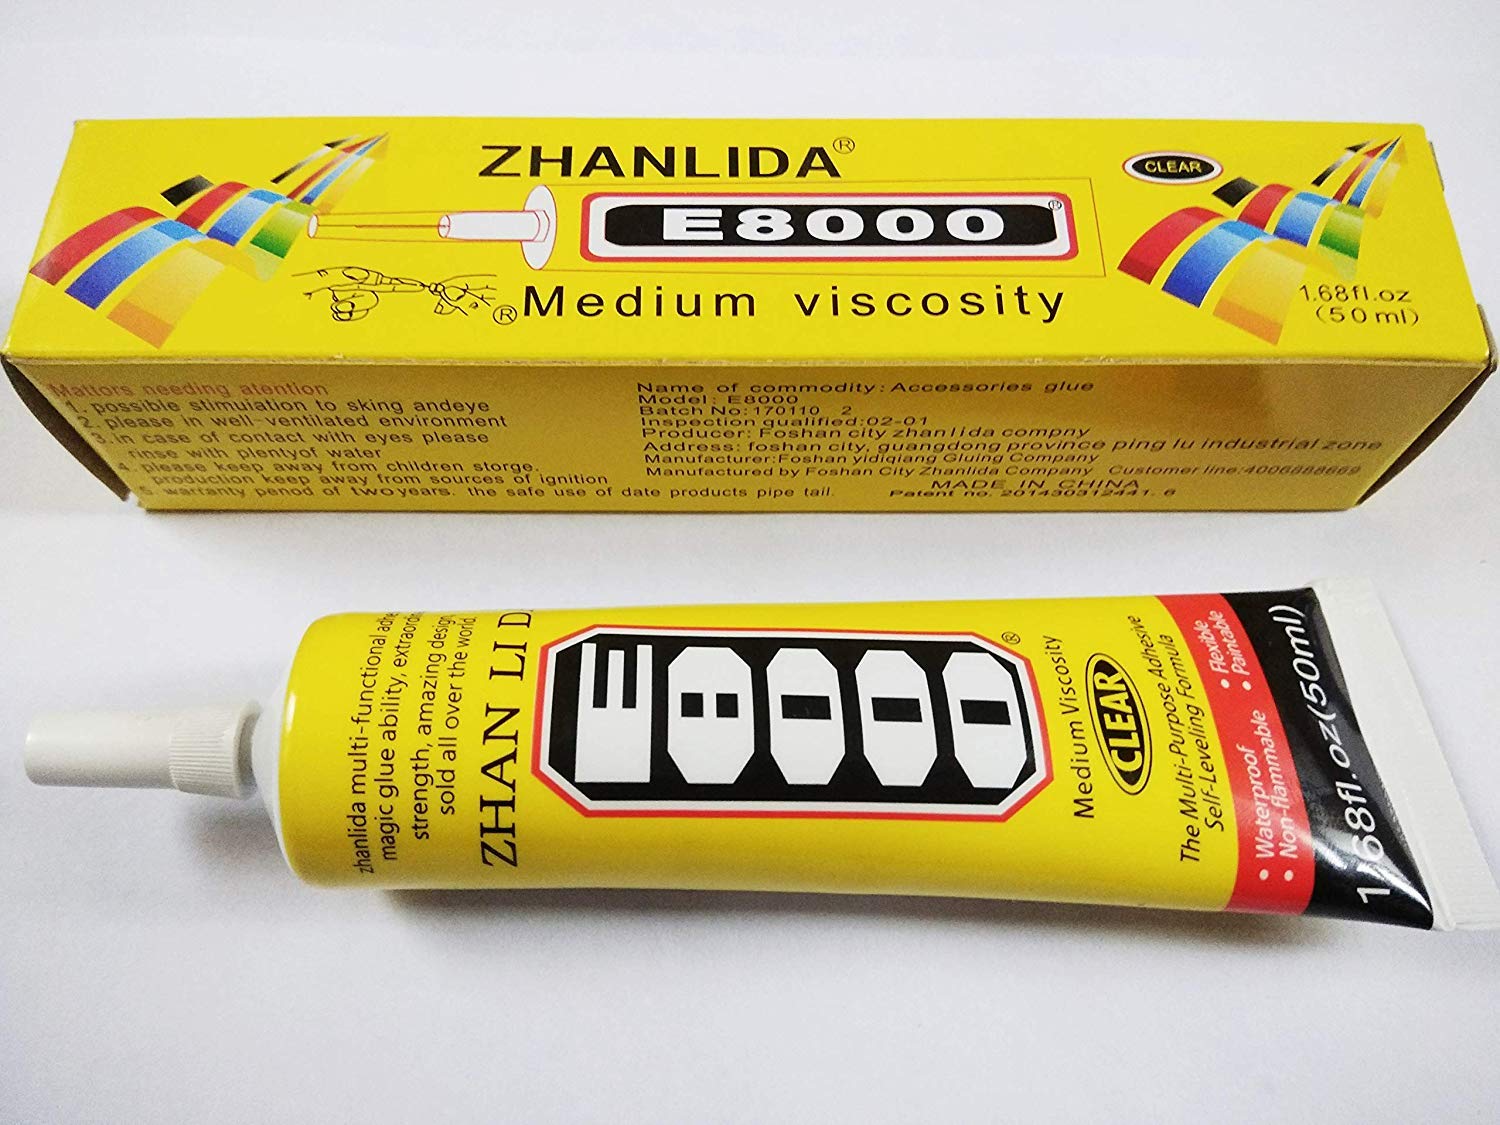 E8000 50 ml Adhesive Glue